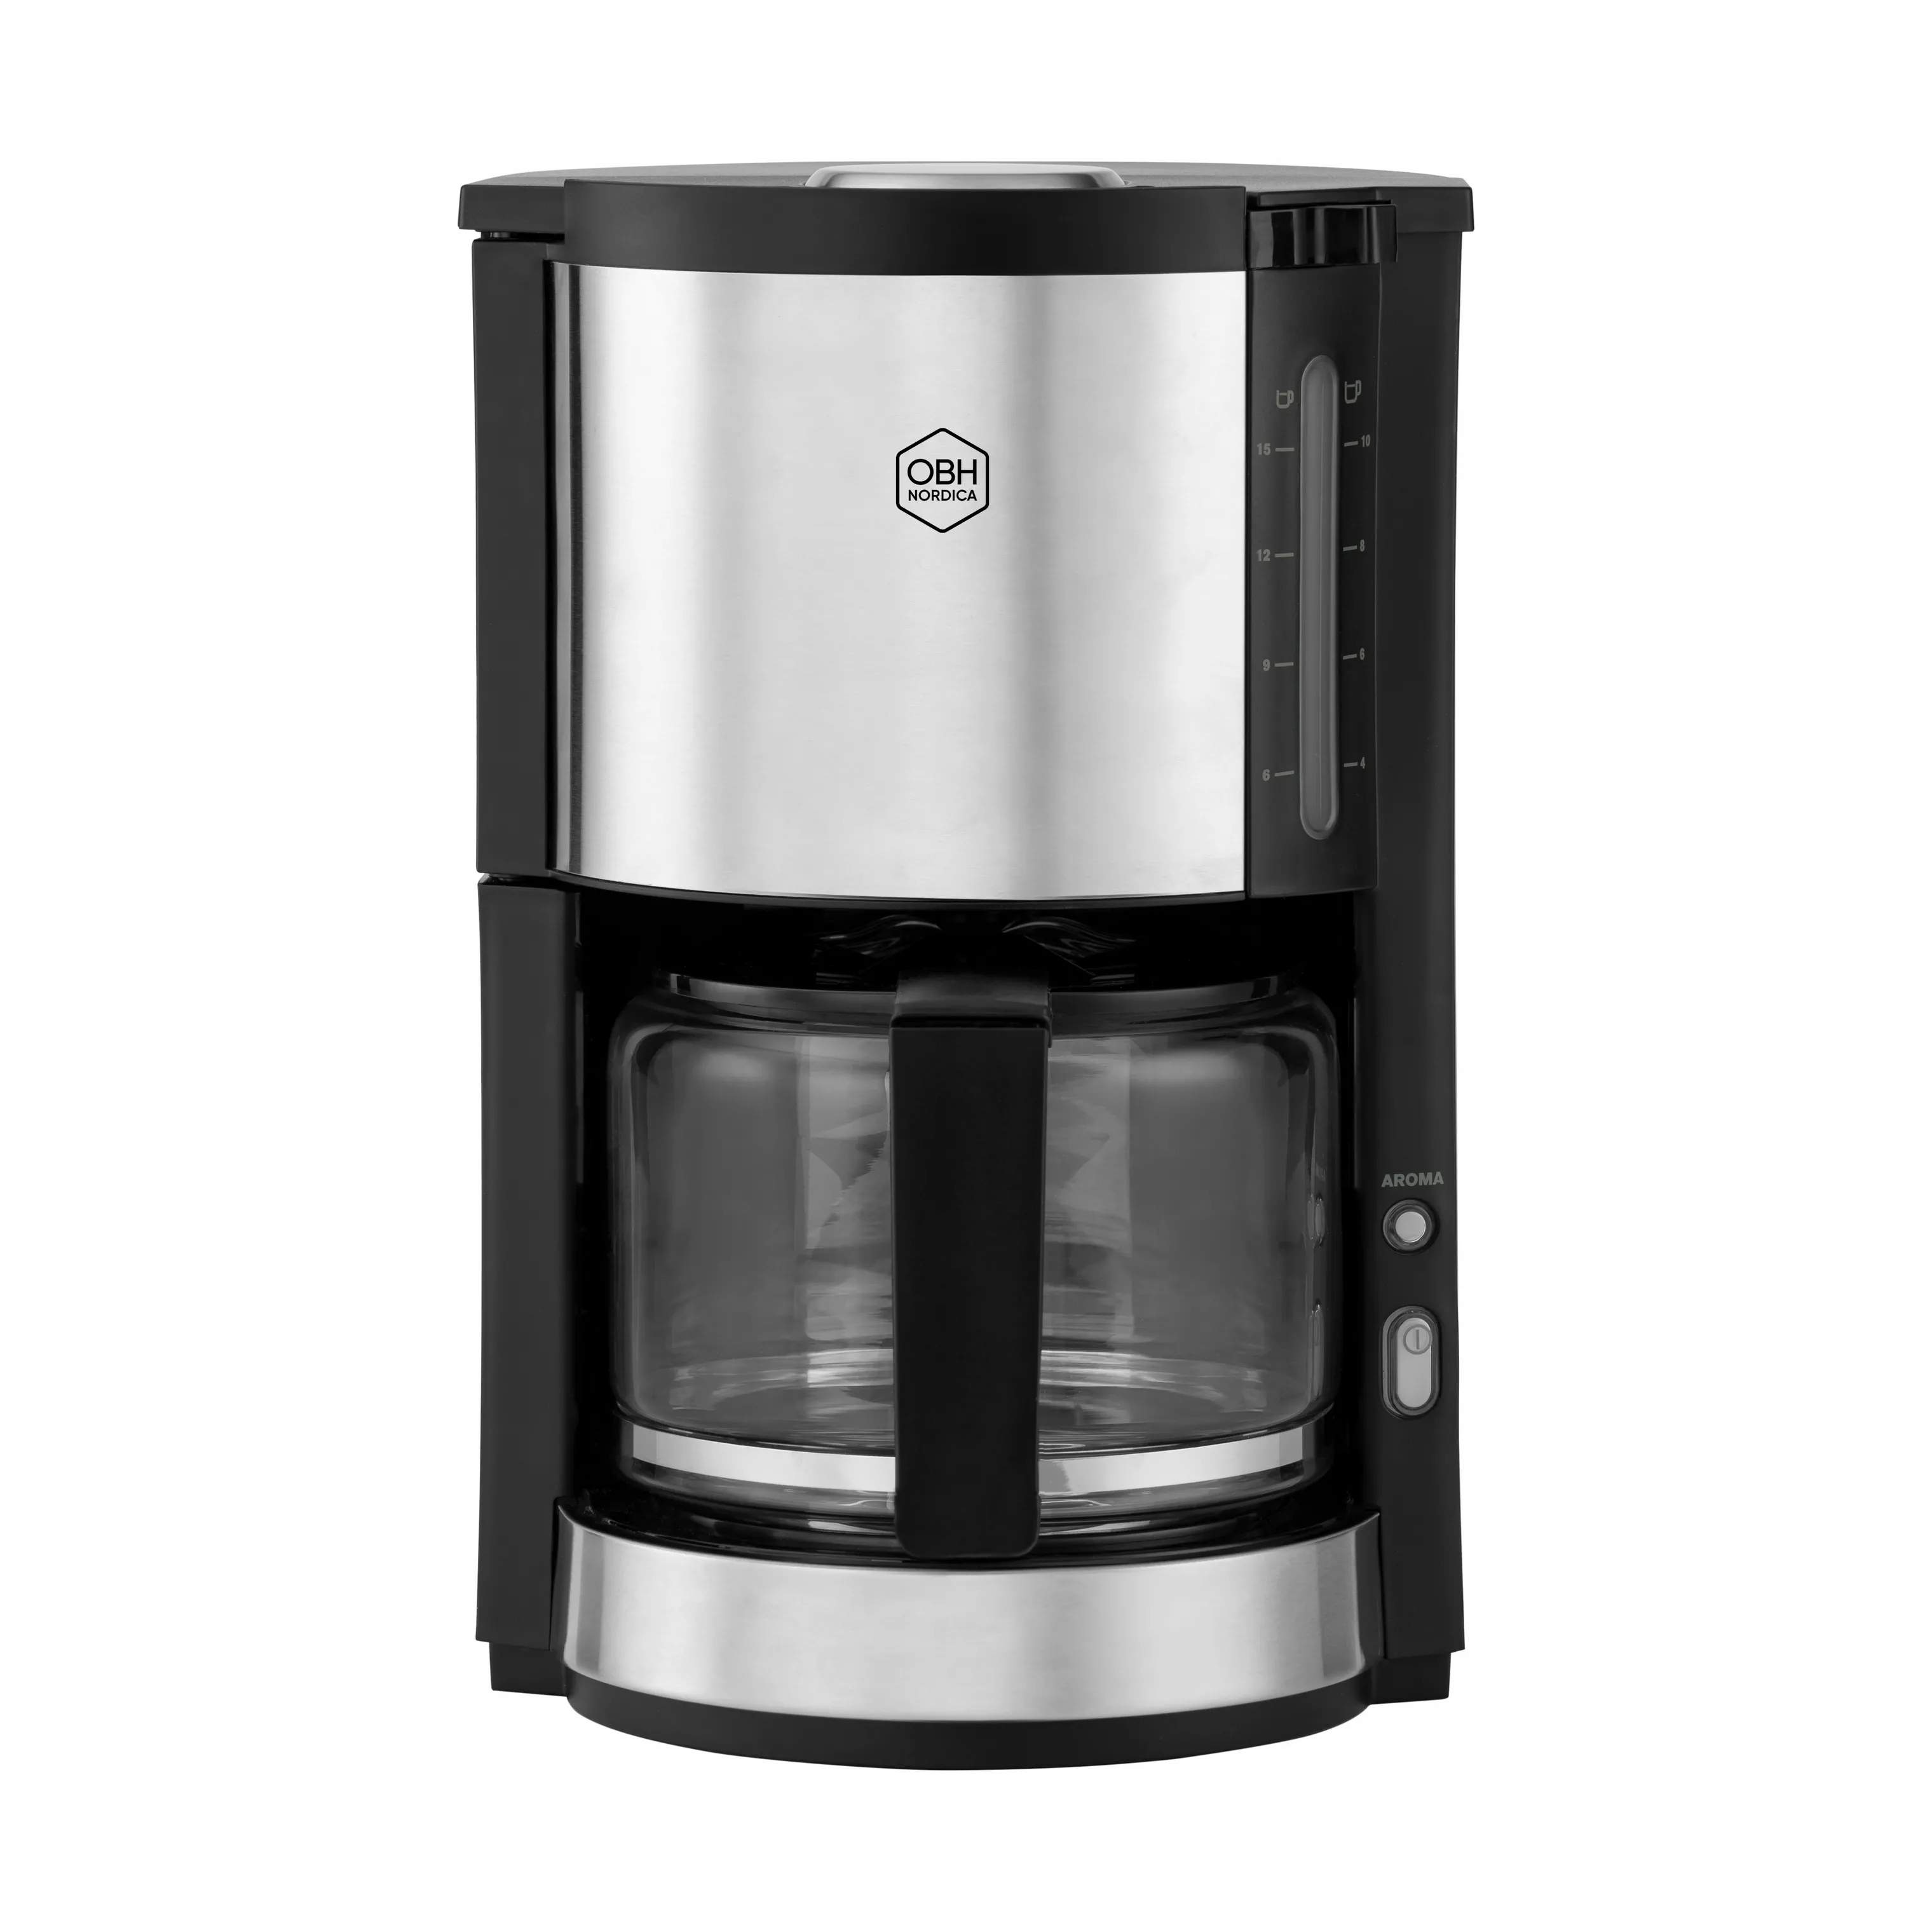 Pro Aroma Plus Kaffemaskine, grå, large